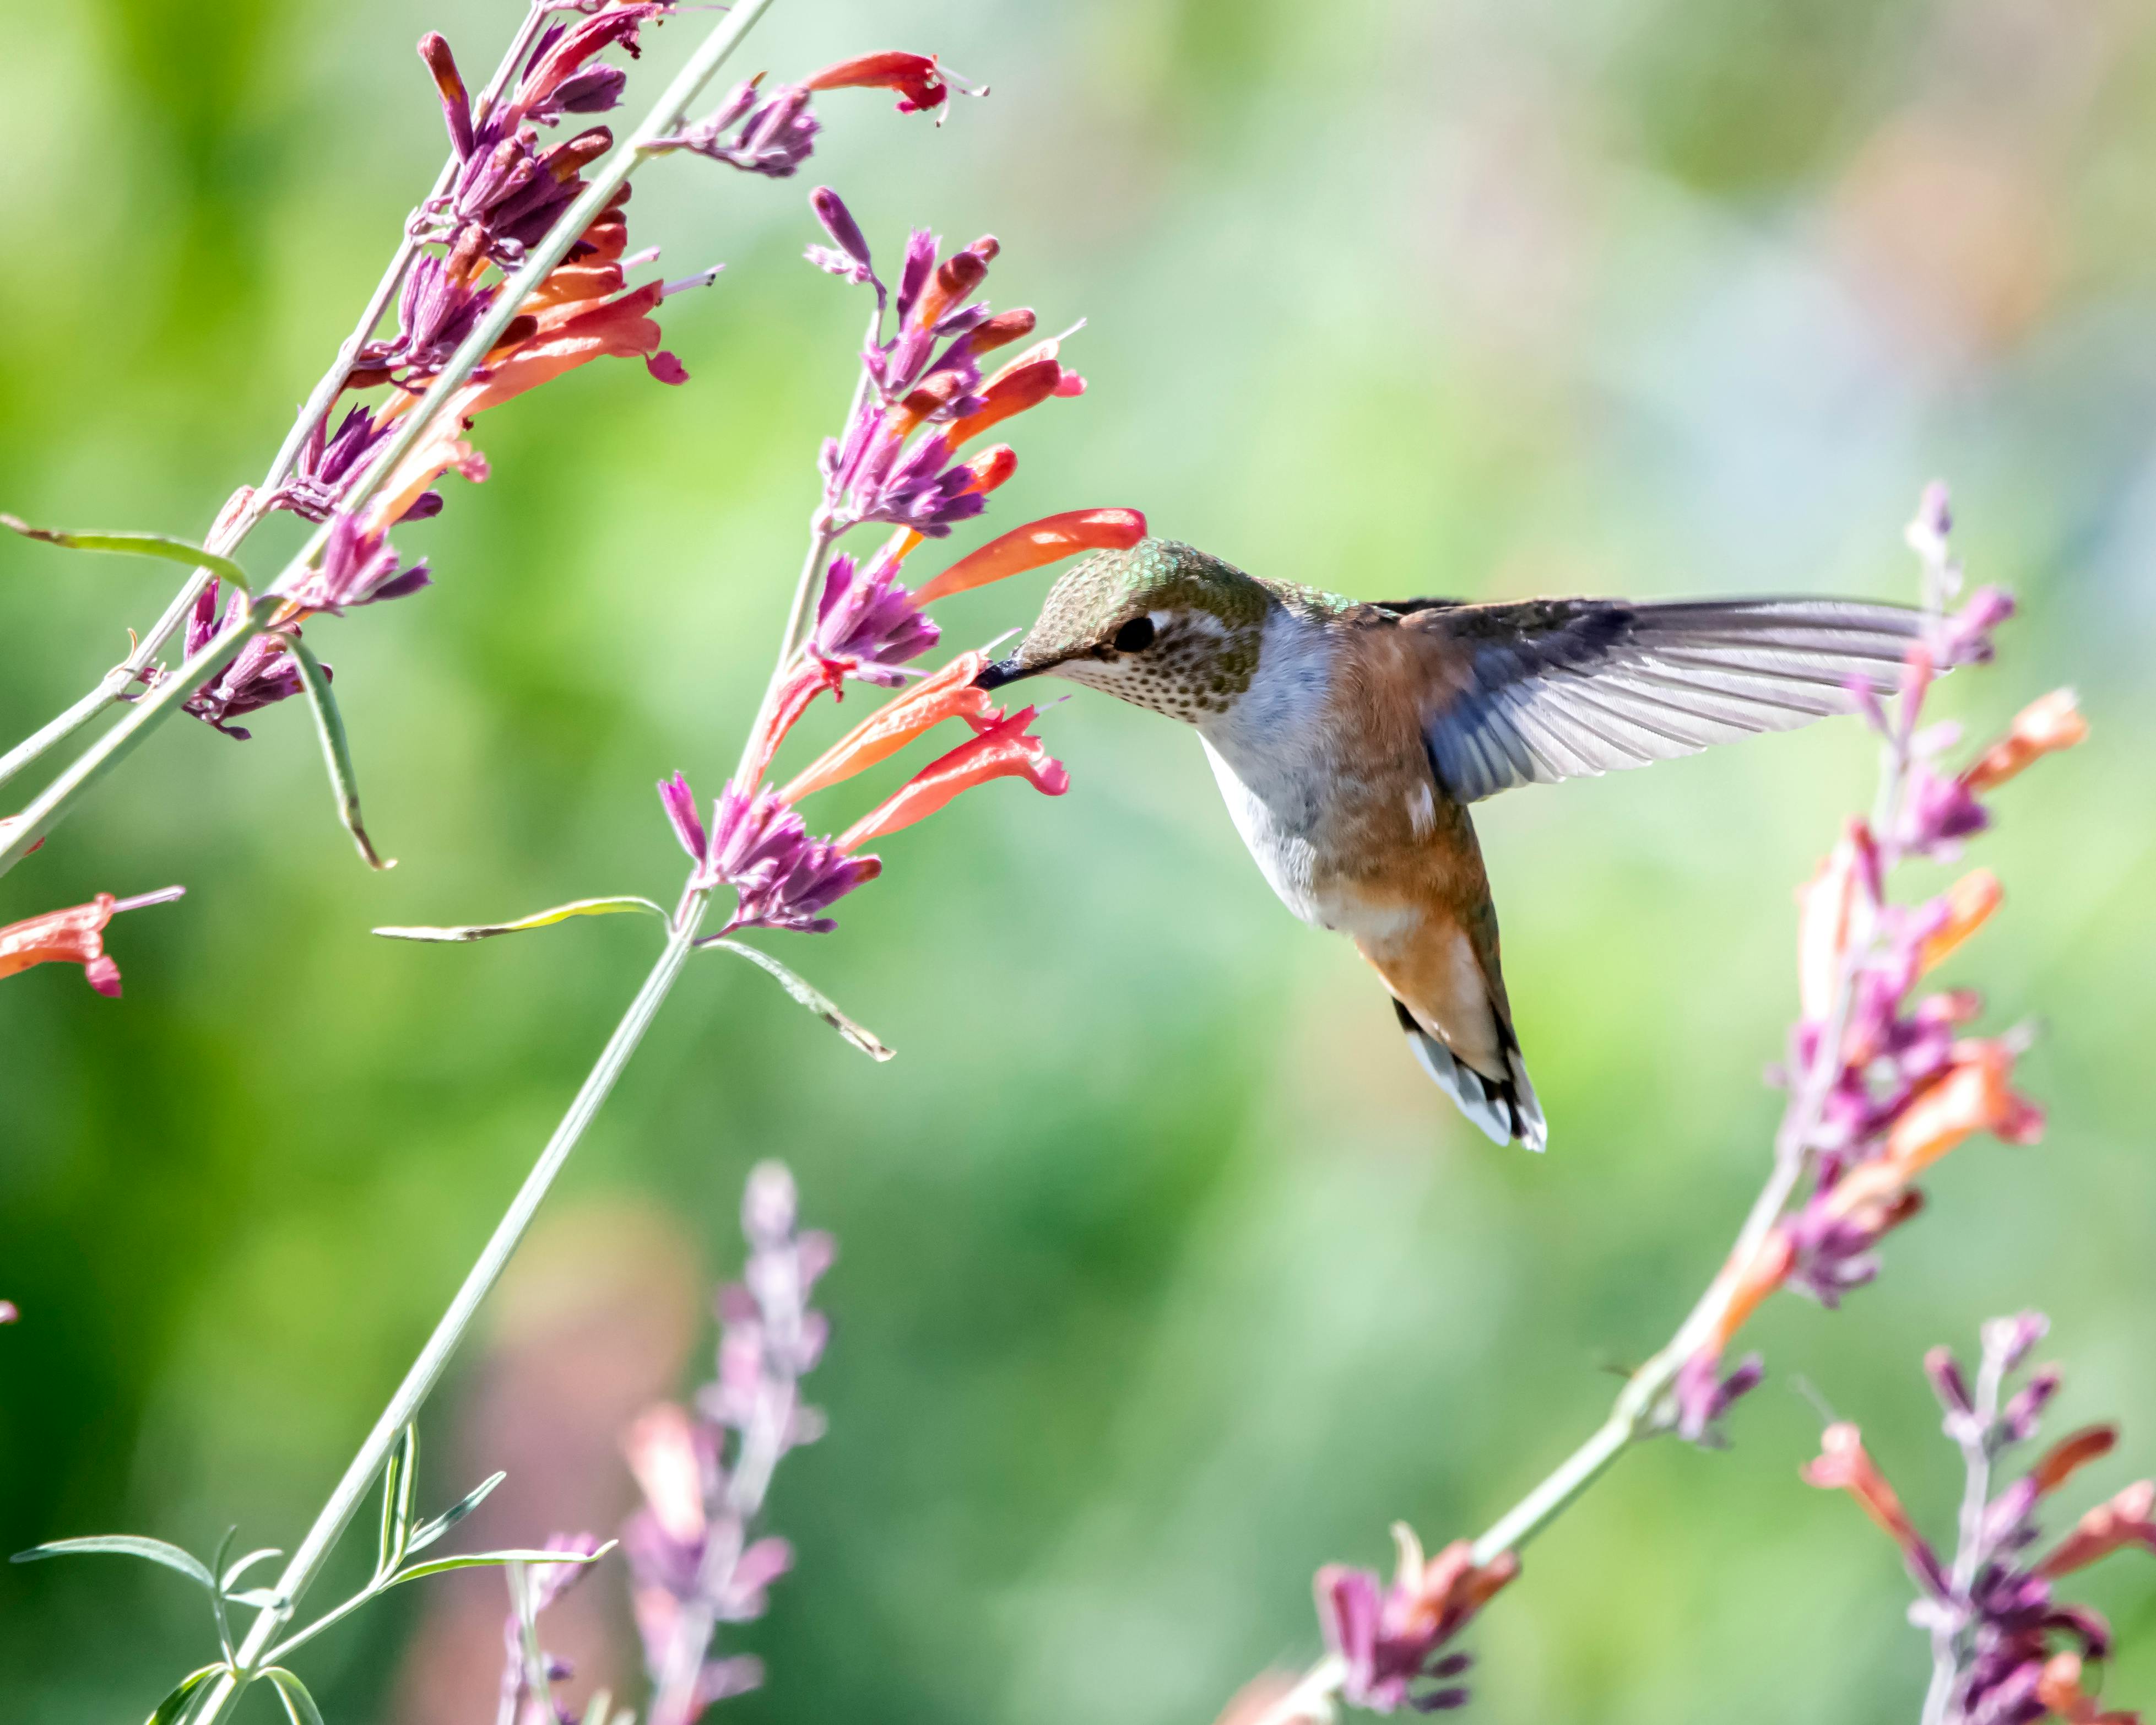 Hummingbird pollinating